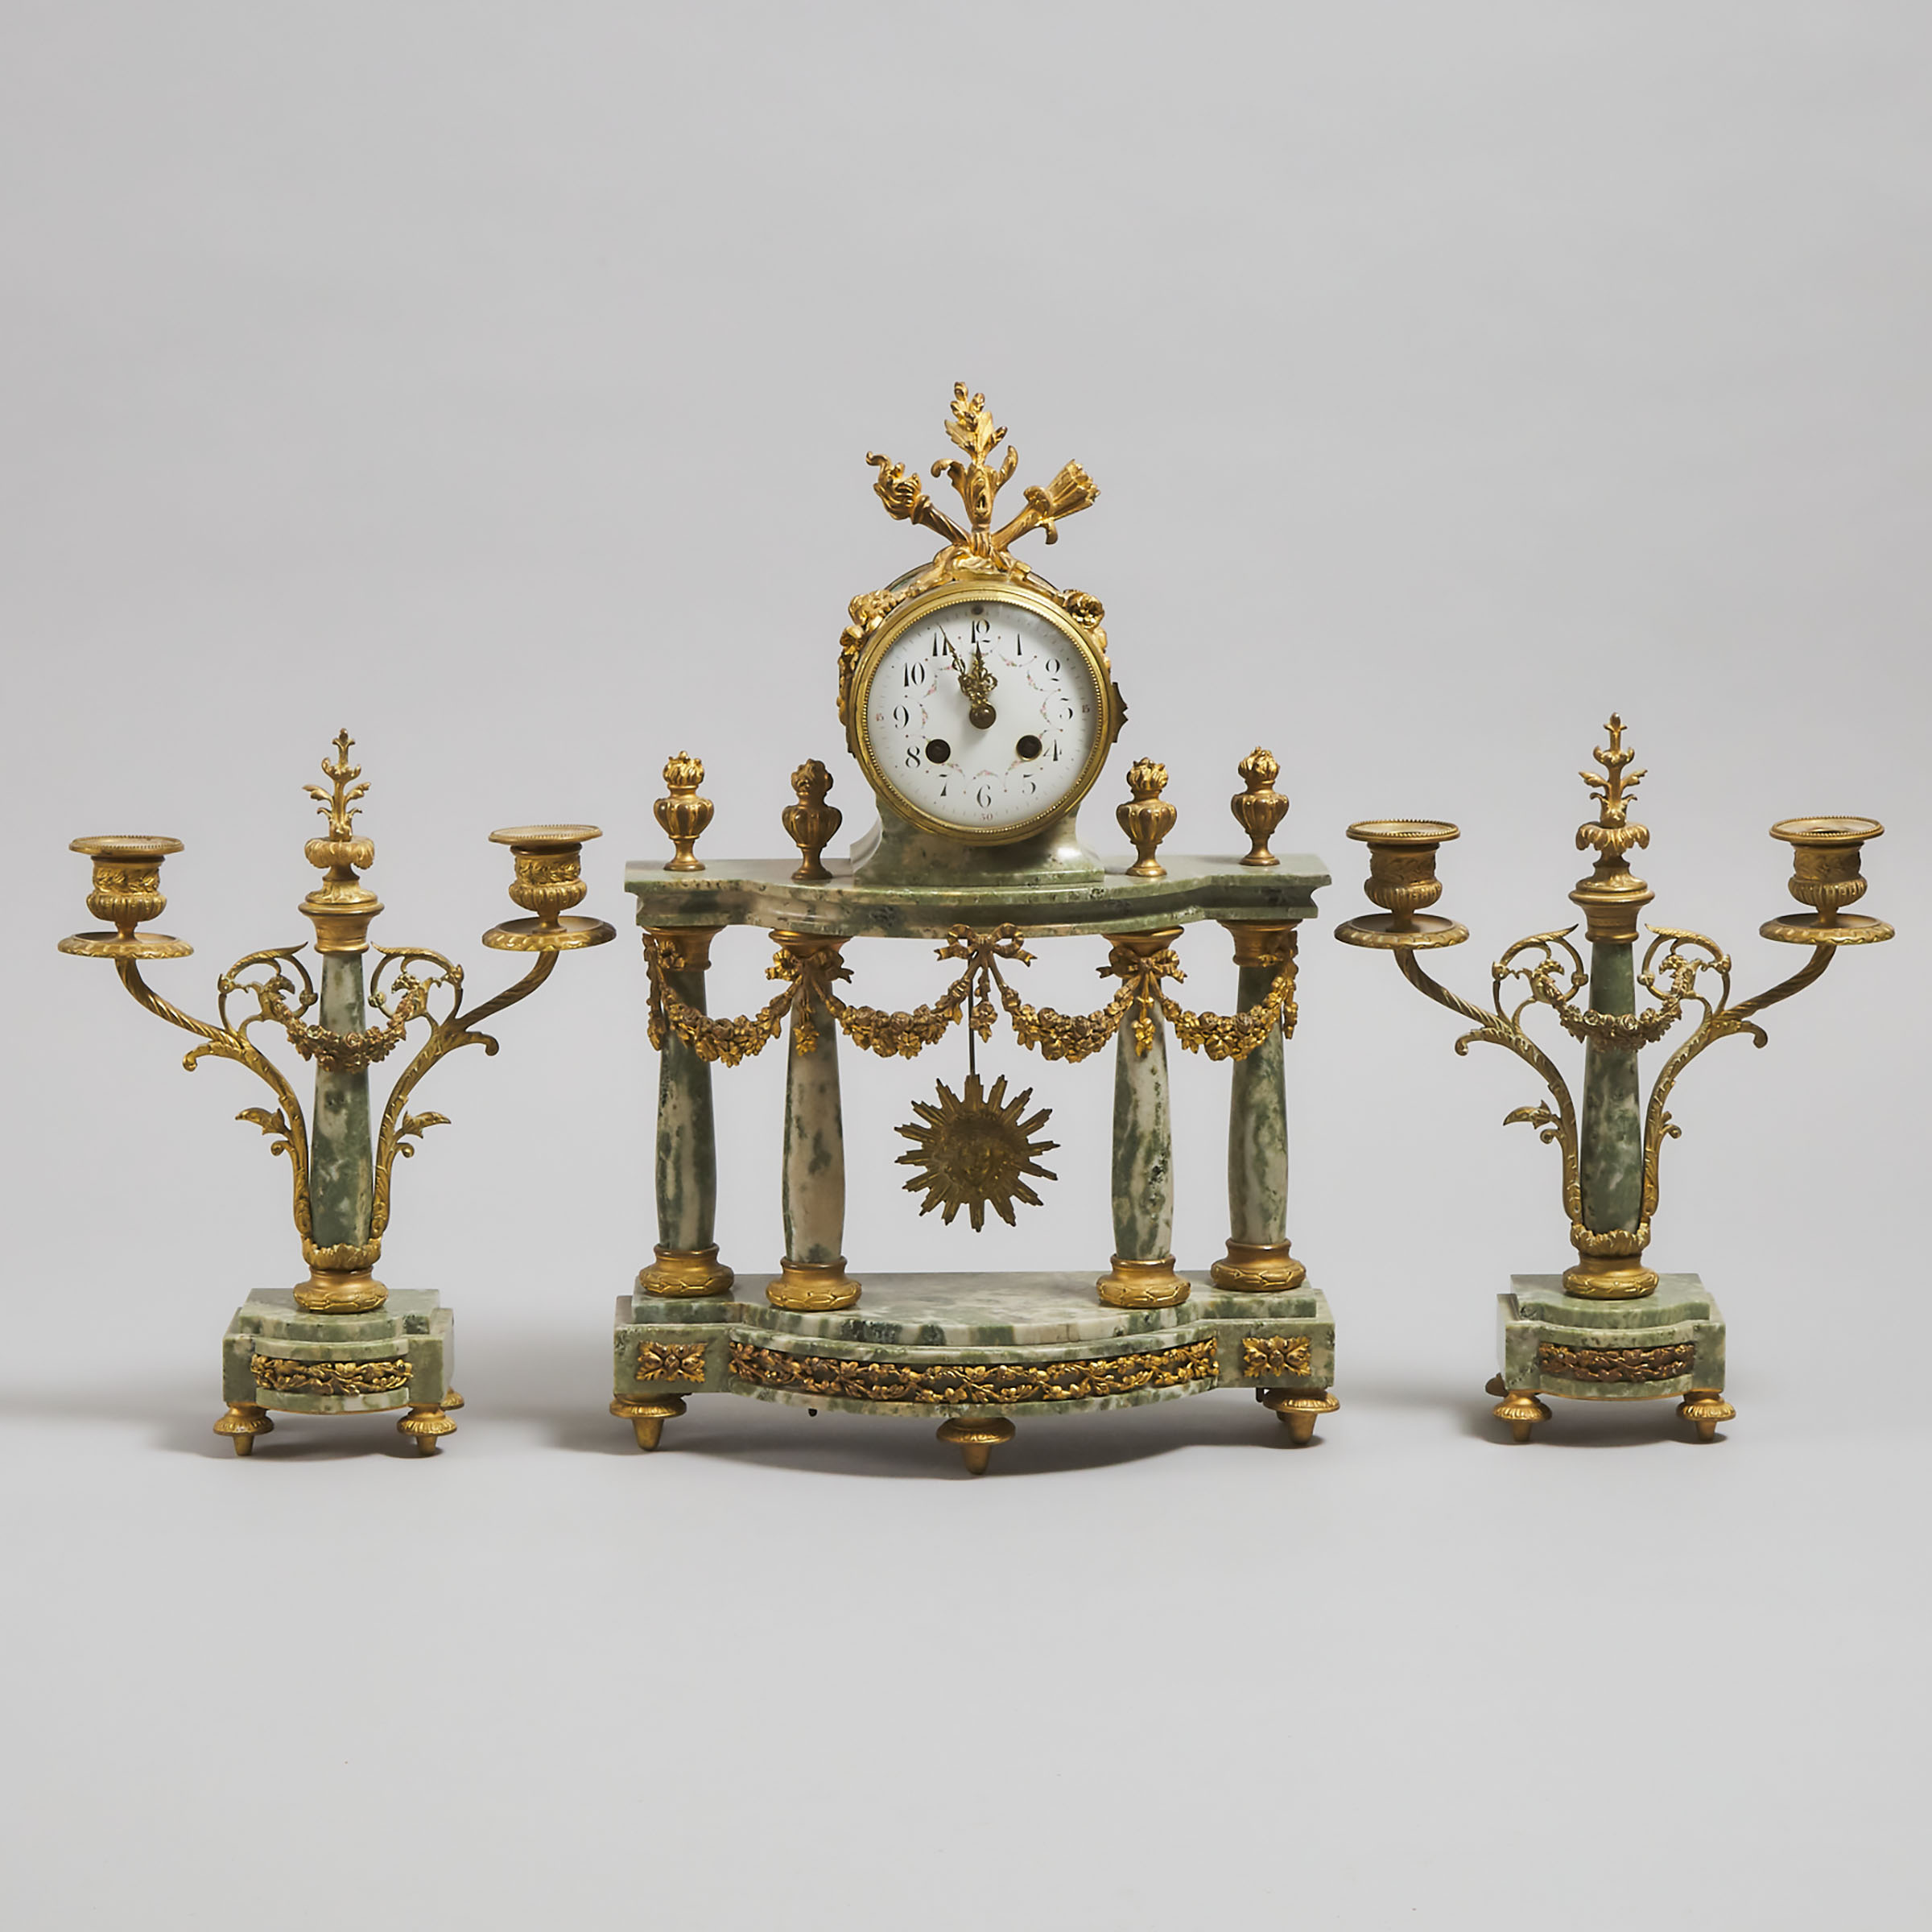 Three Piece French Clock Garniture, late 19th century